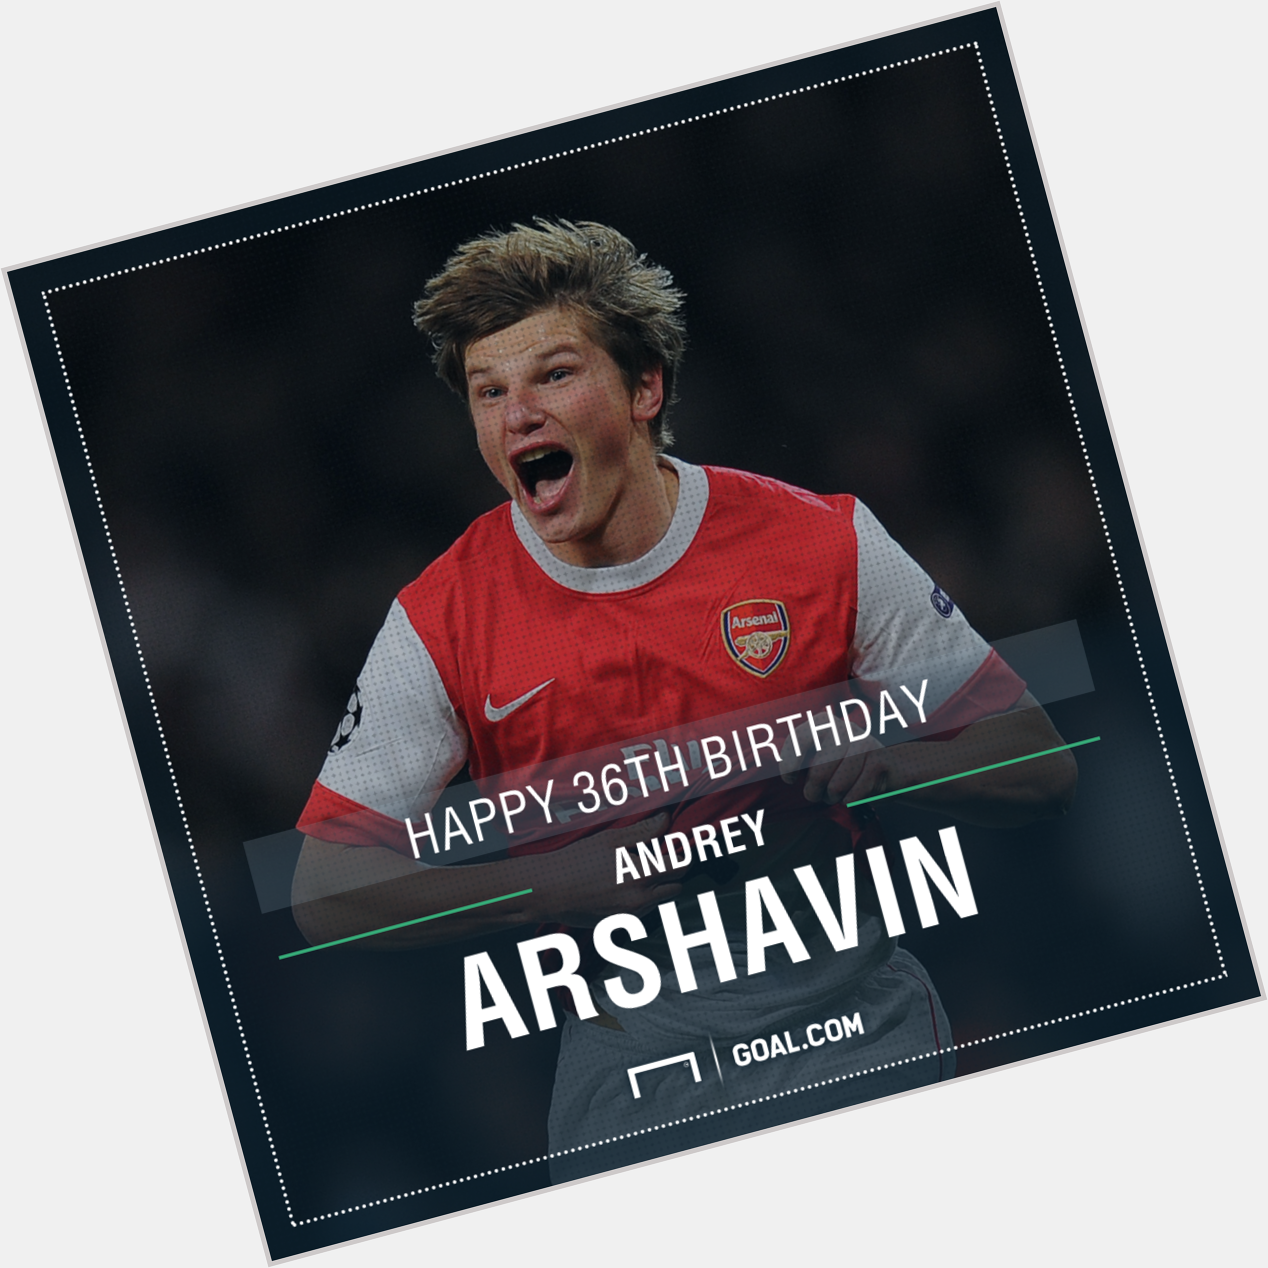  Happy birthday Andrey Arshavin!   